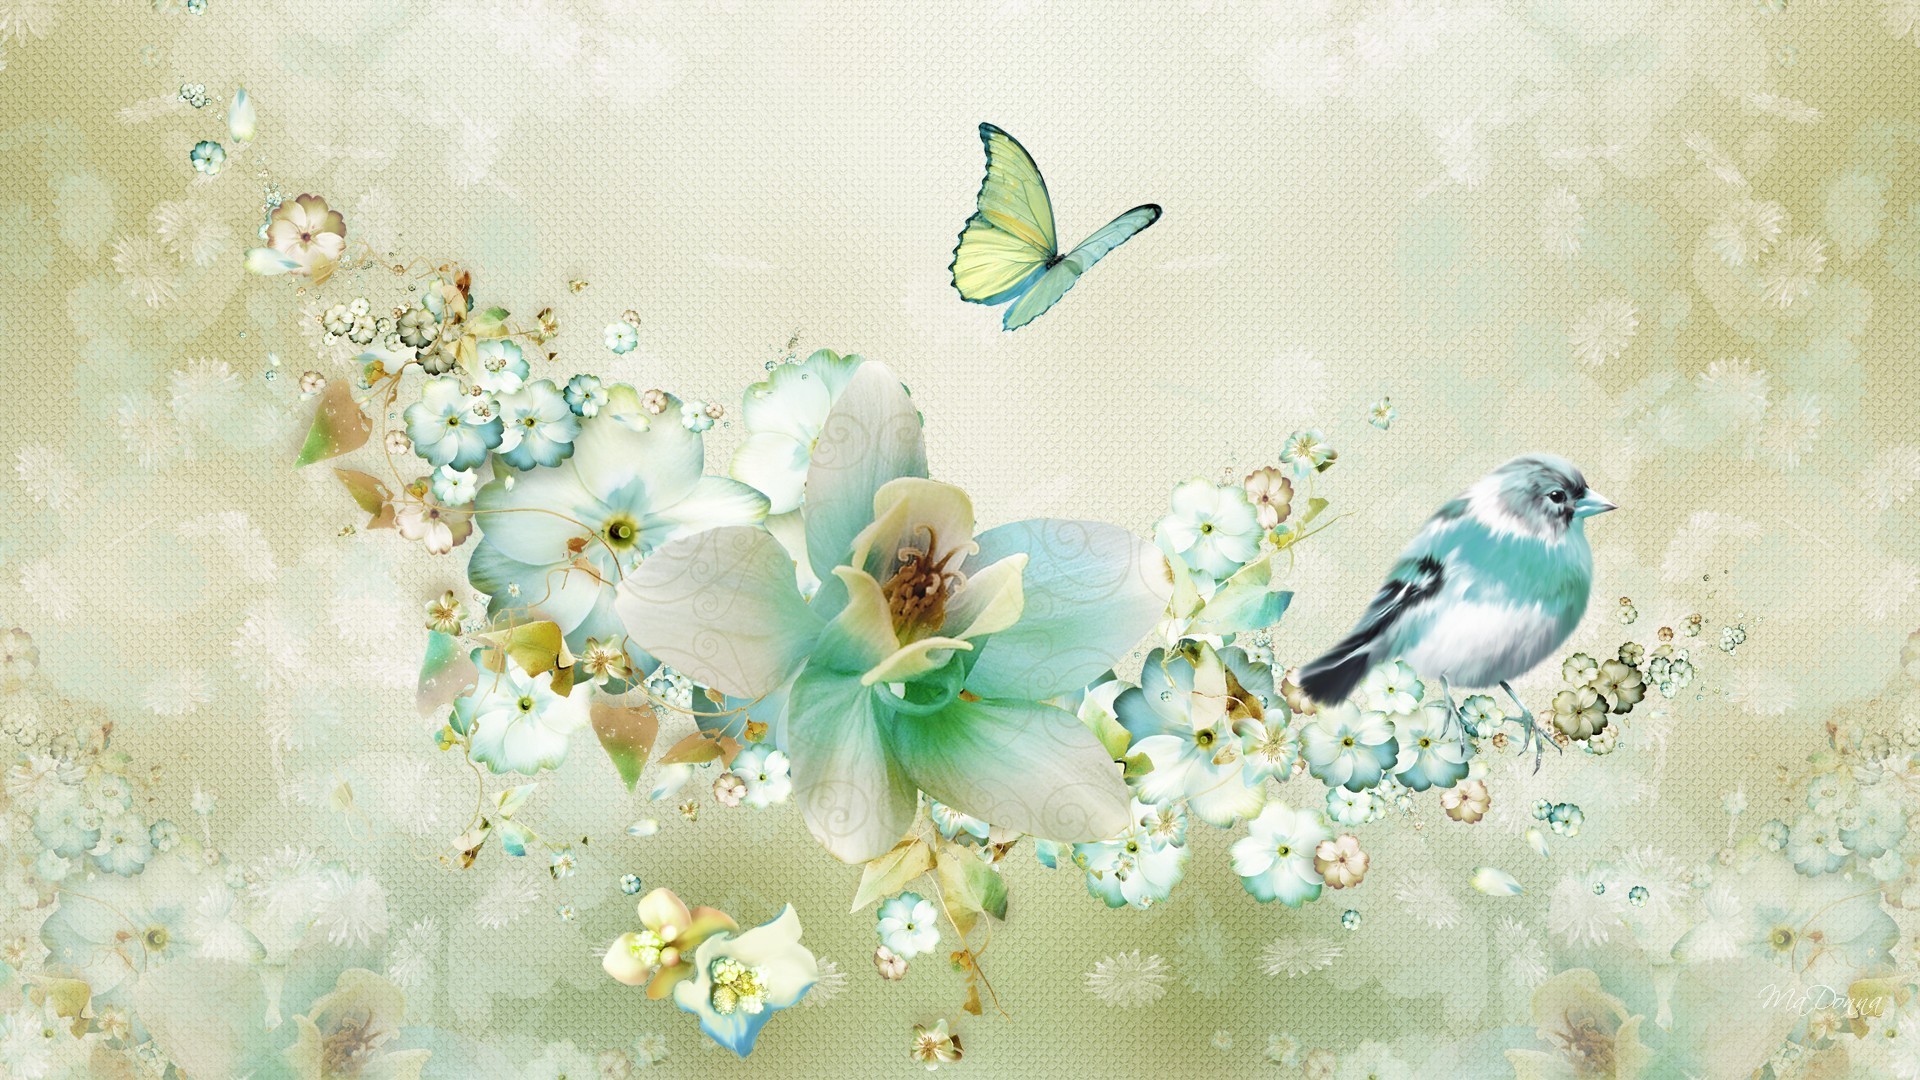 Artistic – Spring Artistic Collage Vintage Retro Blue Bird Butterfly Flower Wallpaper